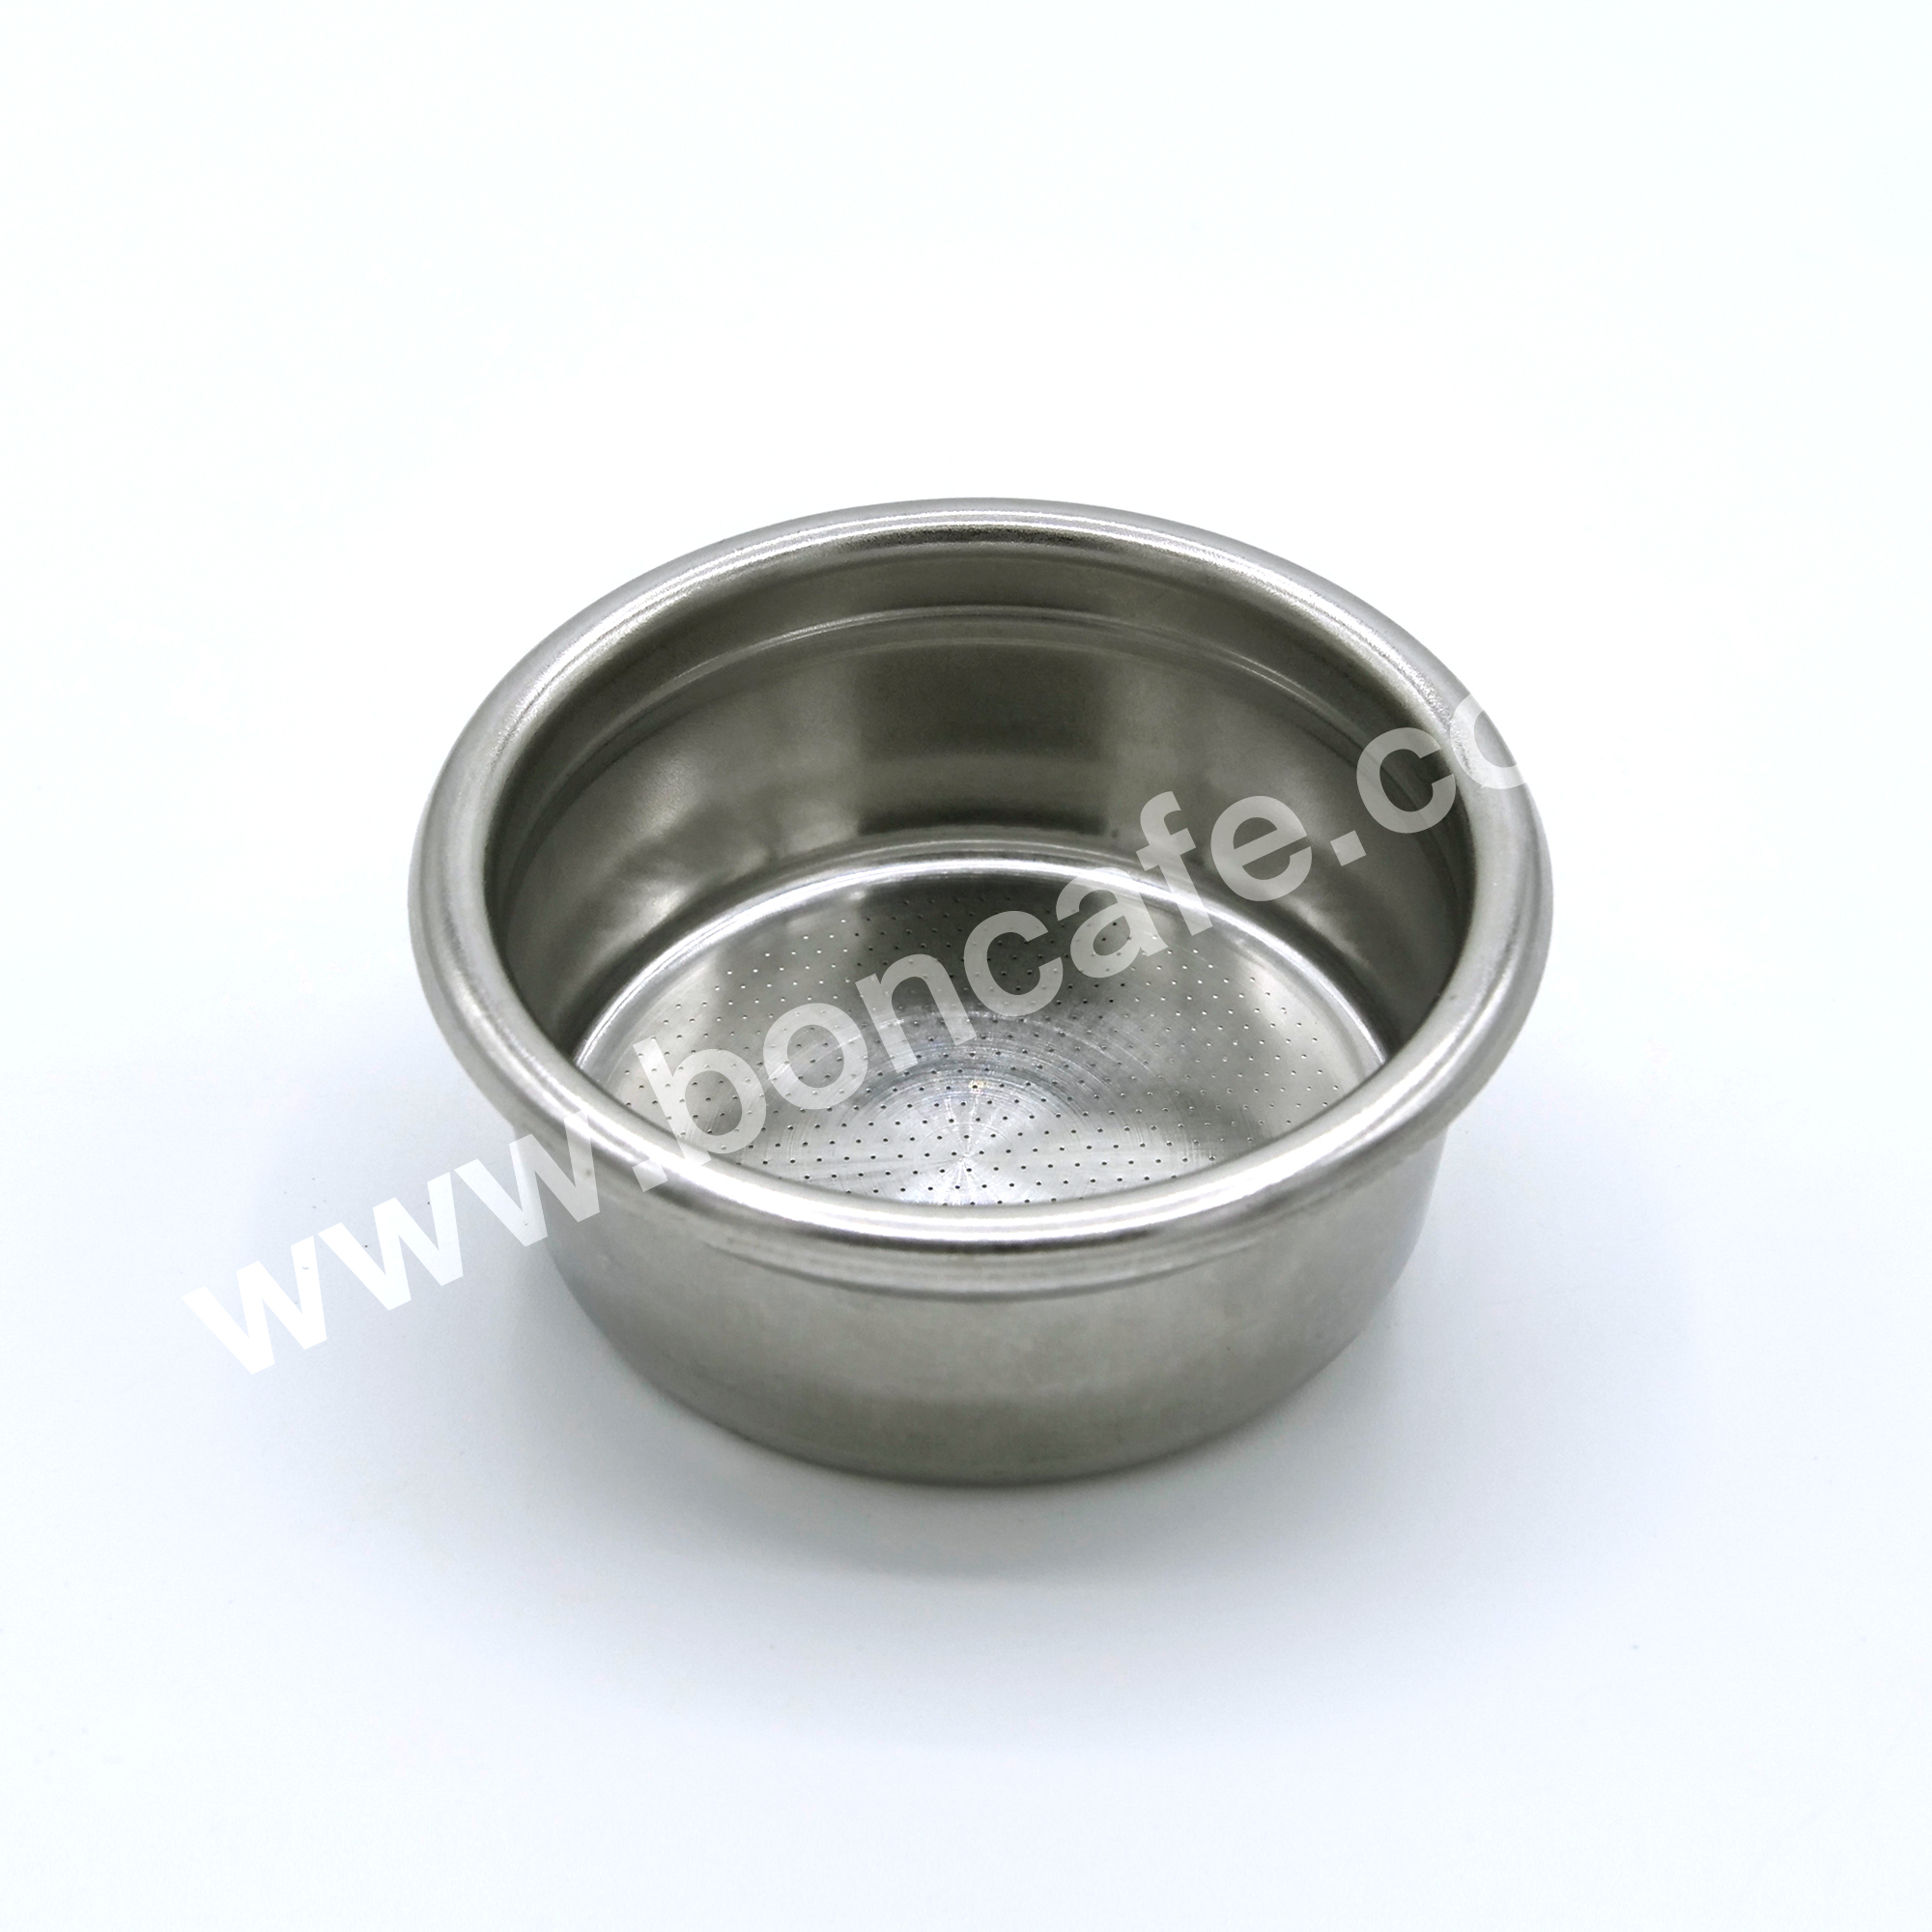 1.-WegaPegaso-3-cups-stainless-steel-filter-30428